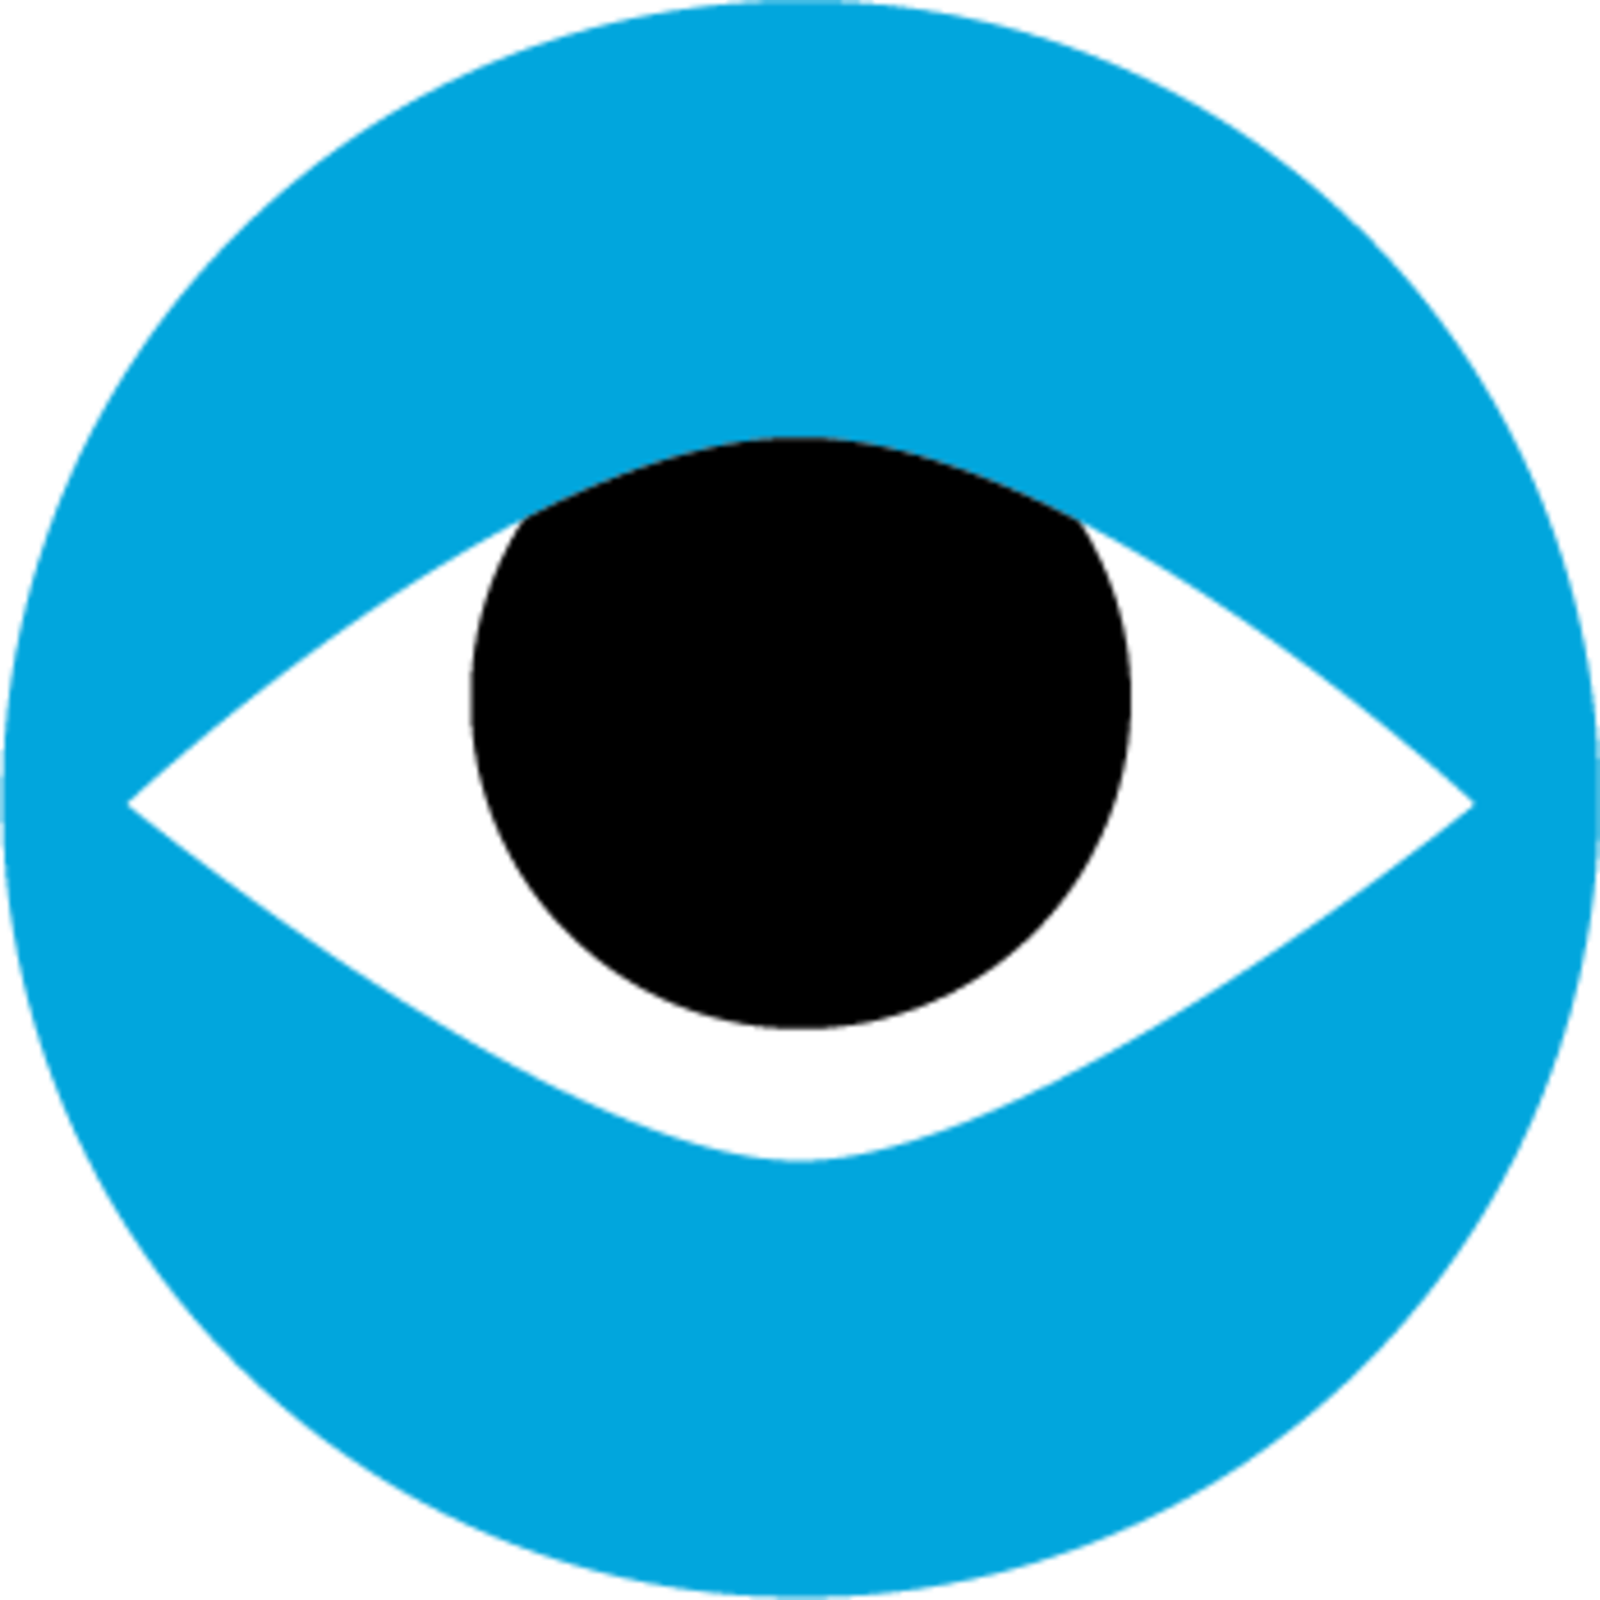 Periscope logo